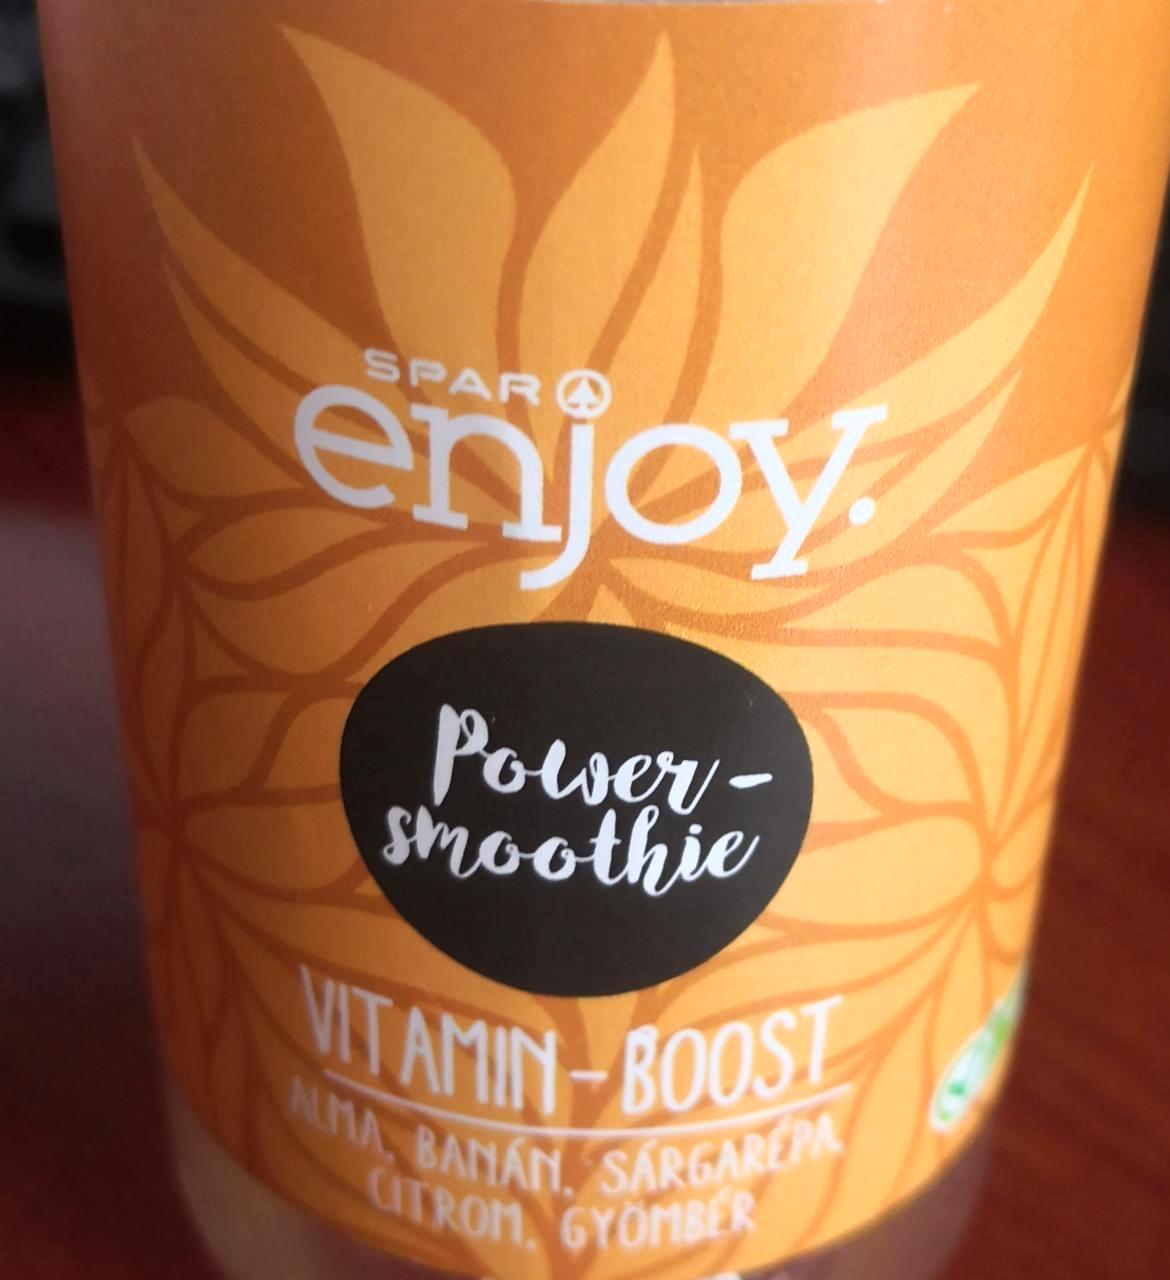 Képek - Power-smoothie Vitamin boost Spar enjoy